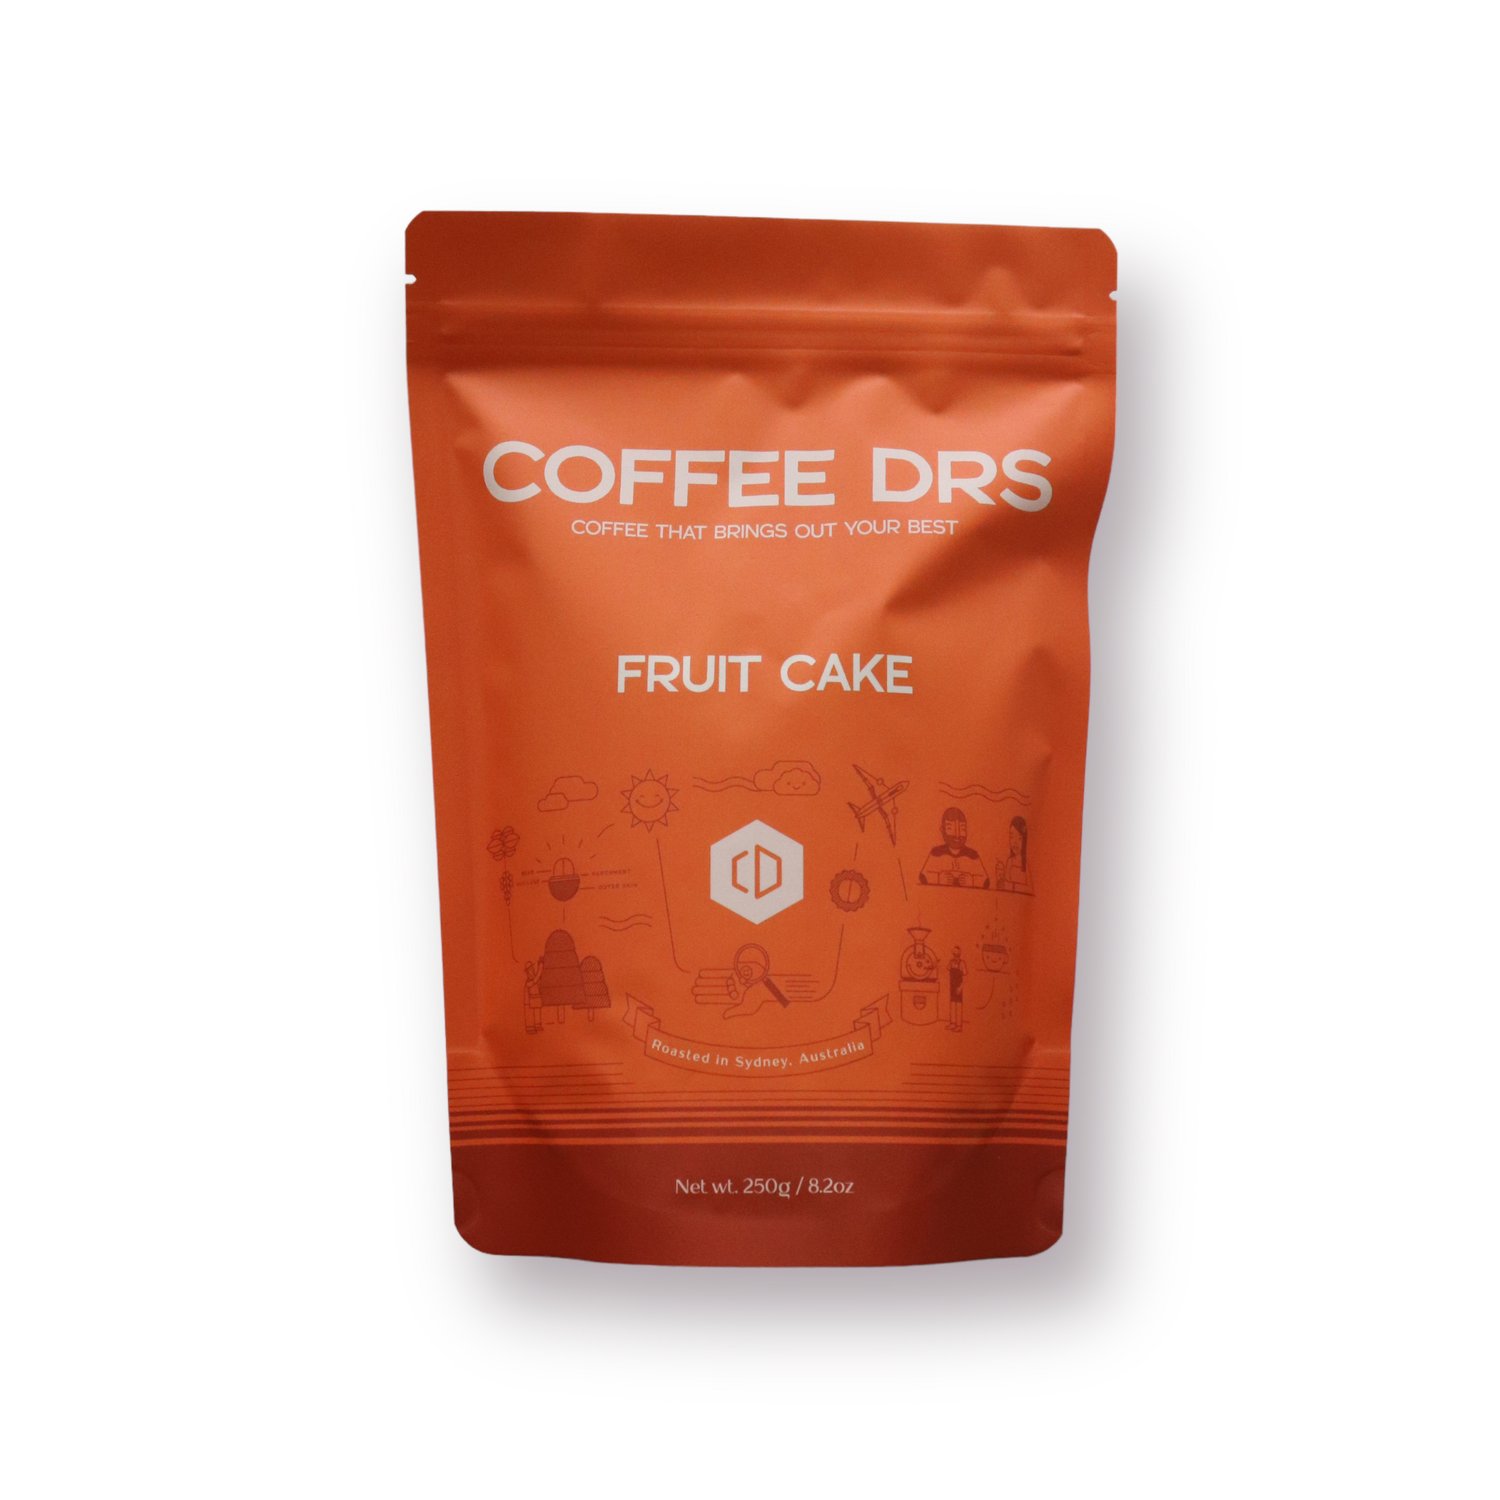 www.coffeedrs.com